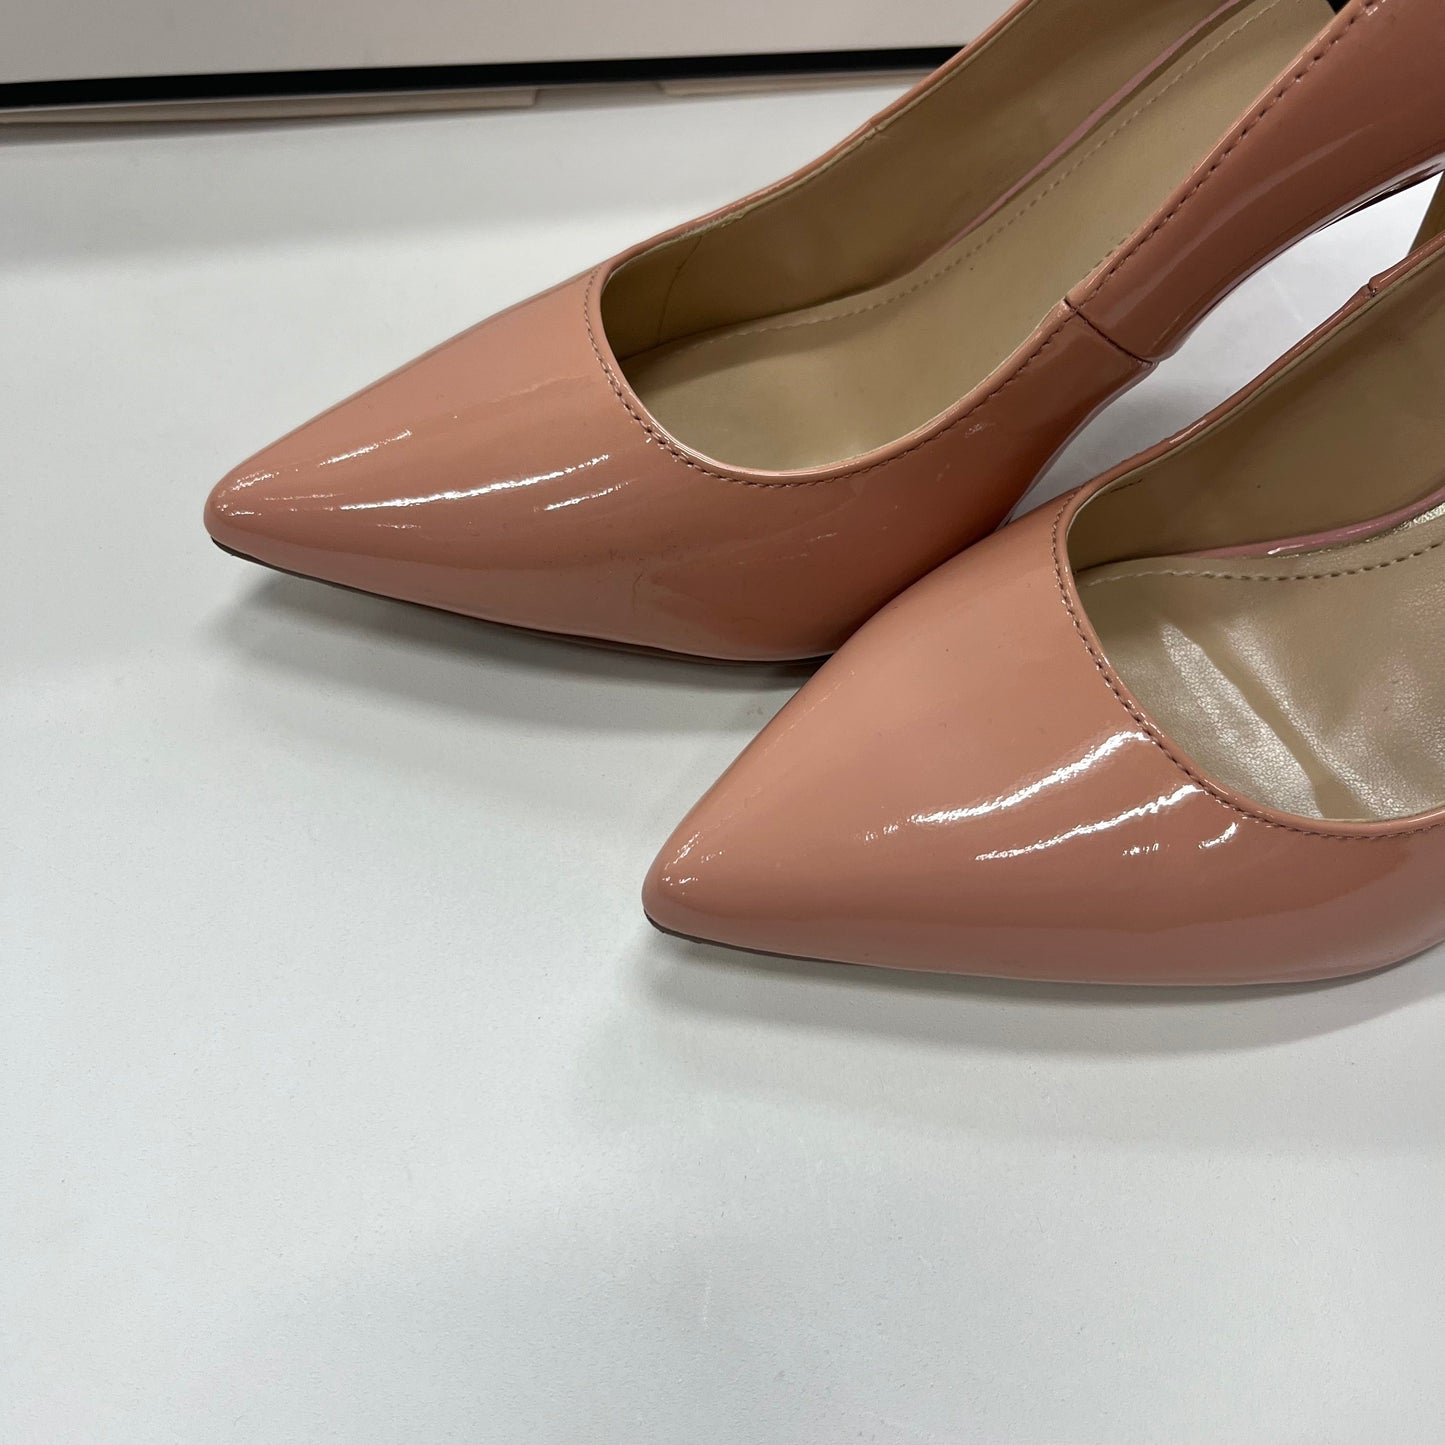 Light Pink Shoes Heels D Orsay White House Black Market, Size 7